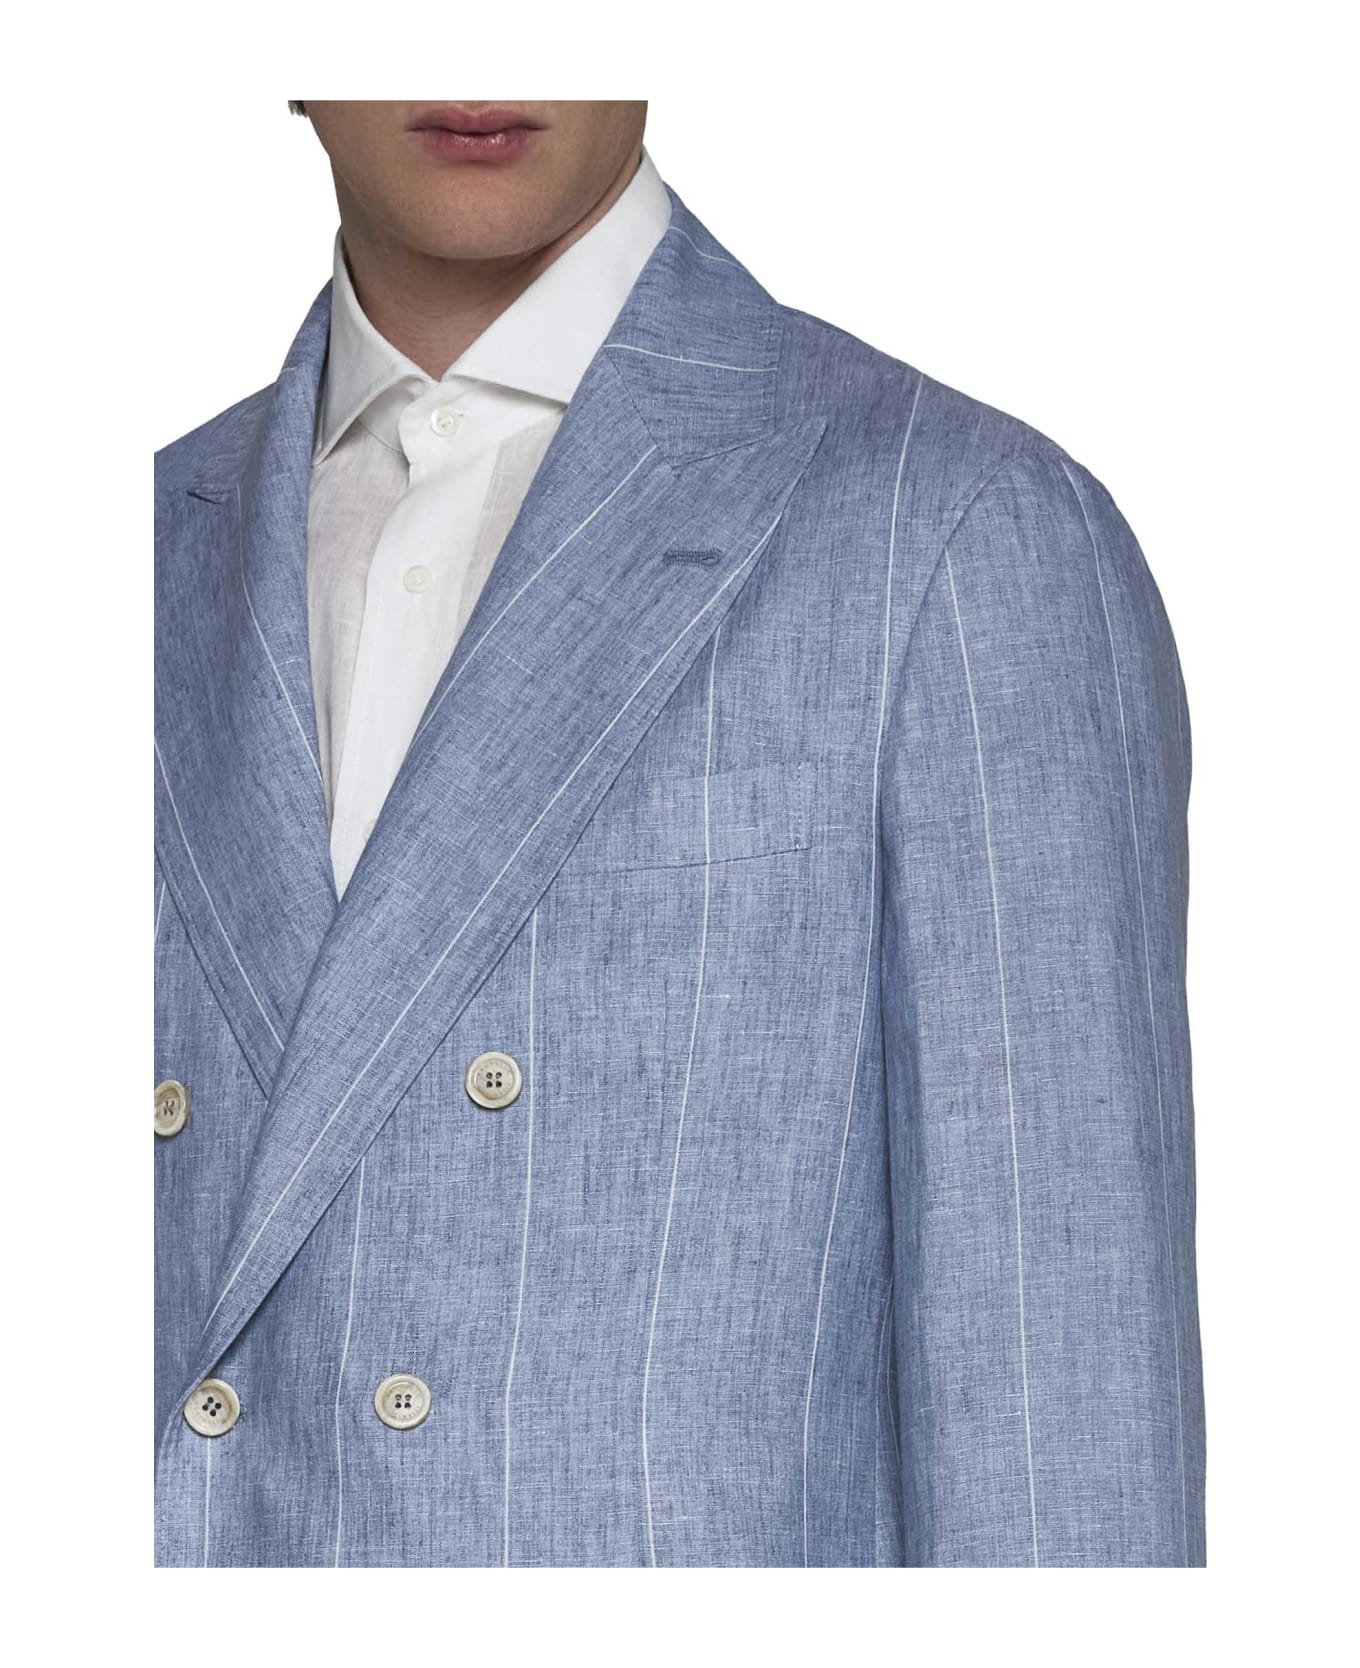 Brunello Cucinelli Double-breasted Striped Tailored Suit - Celeste スーツ